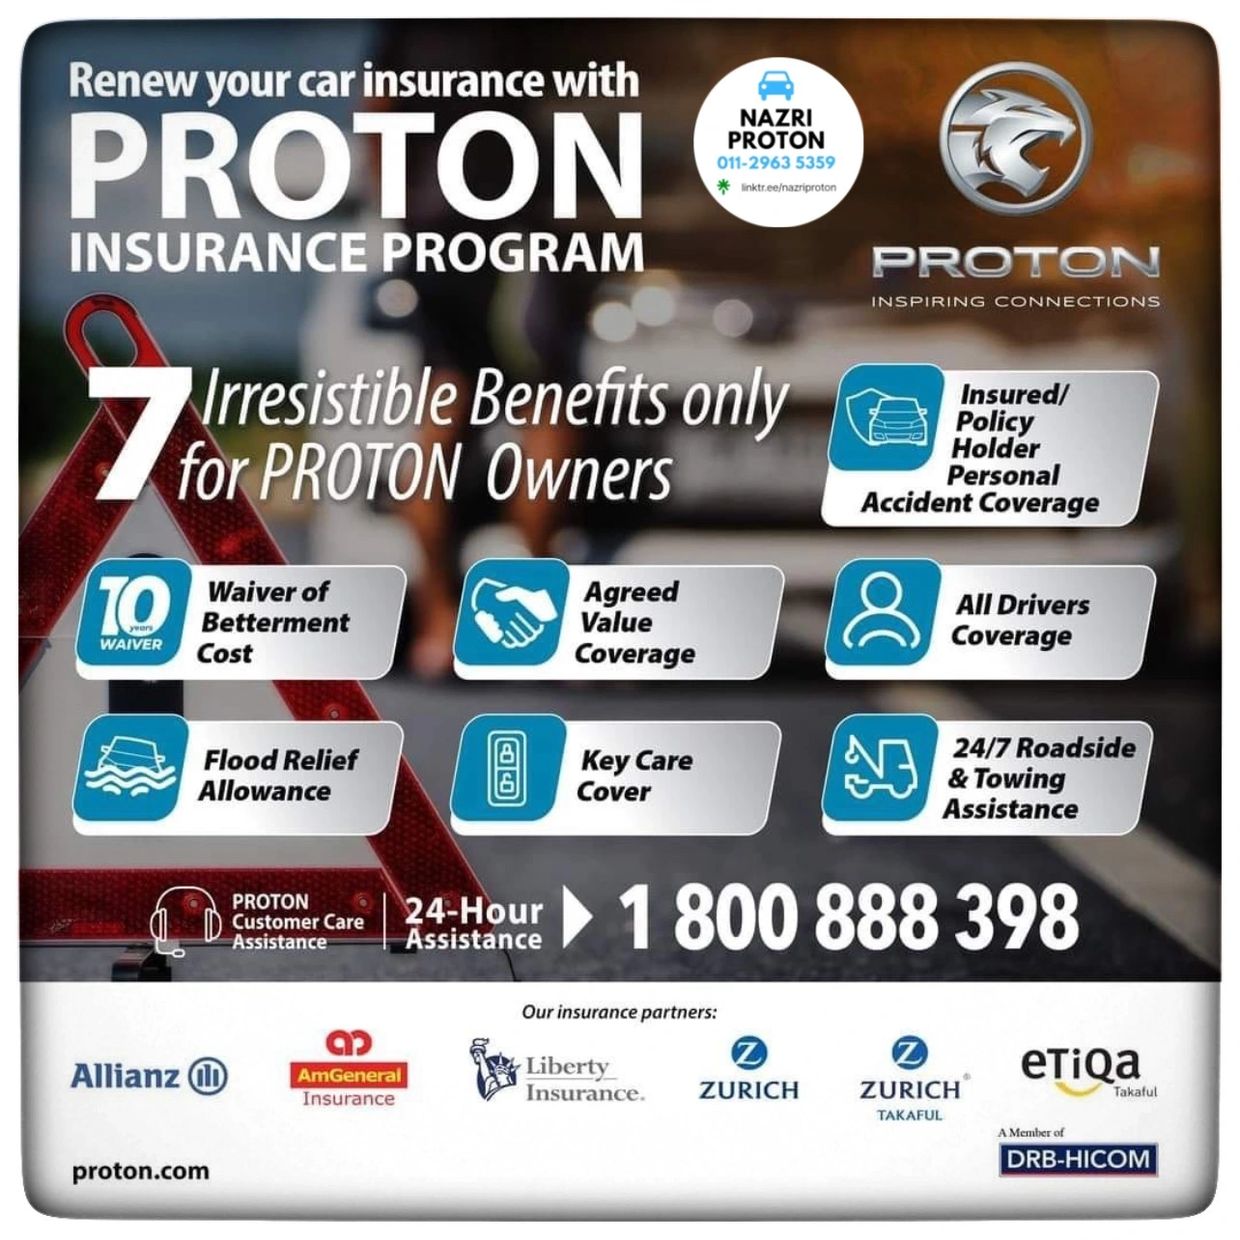 Proton Insurance Program Nazri Sales Advisor Proton